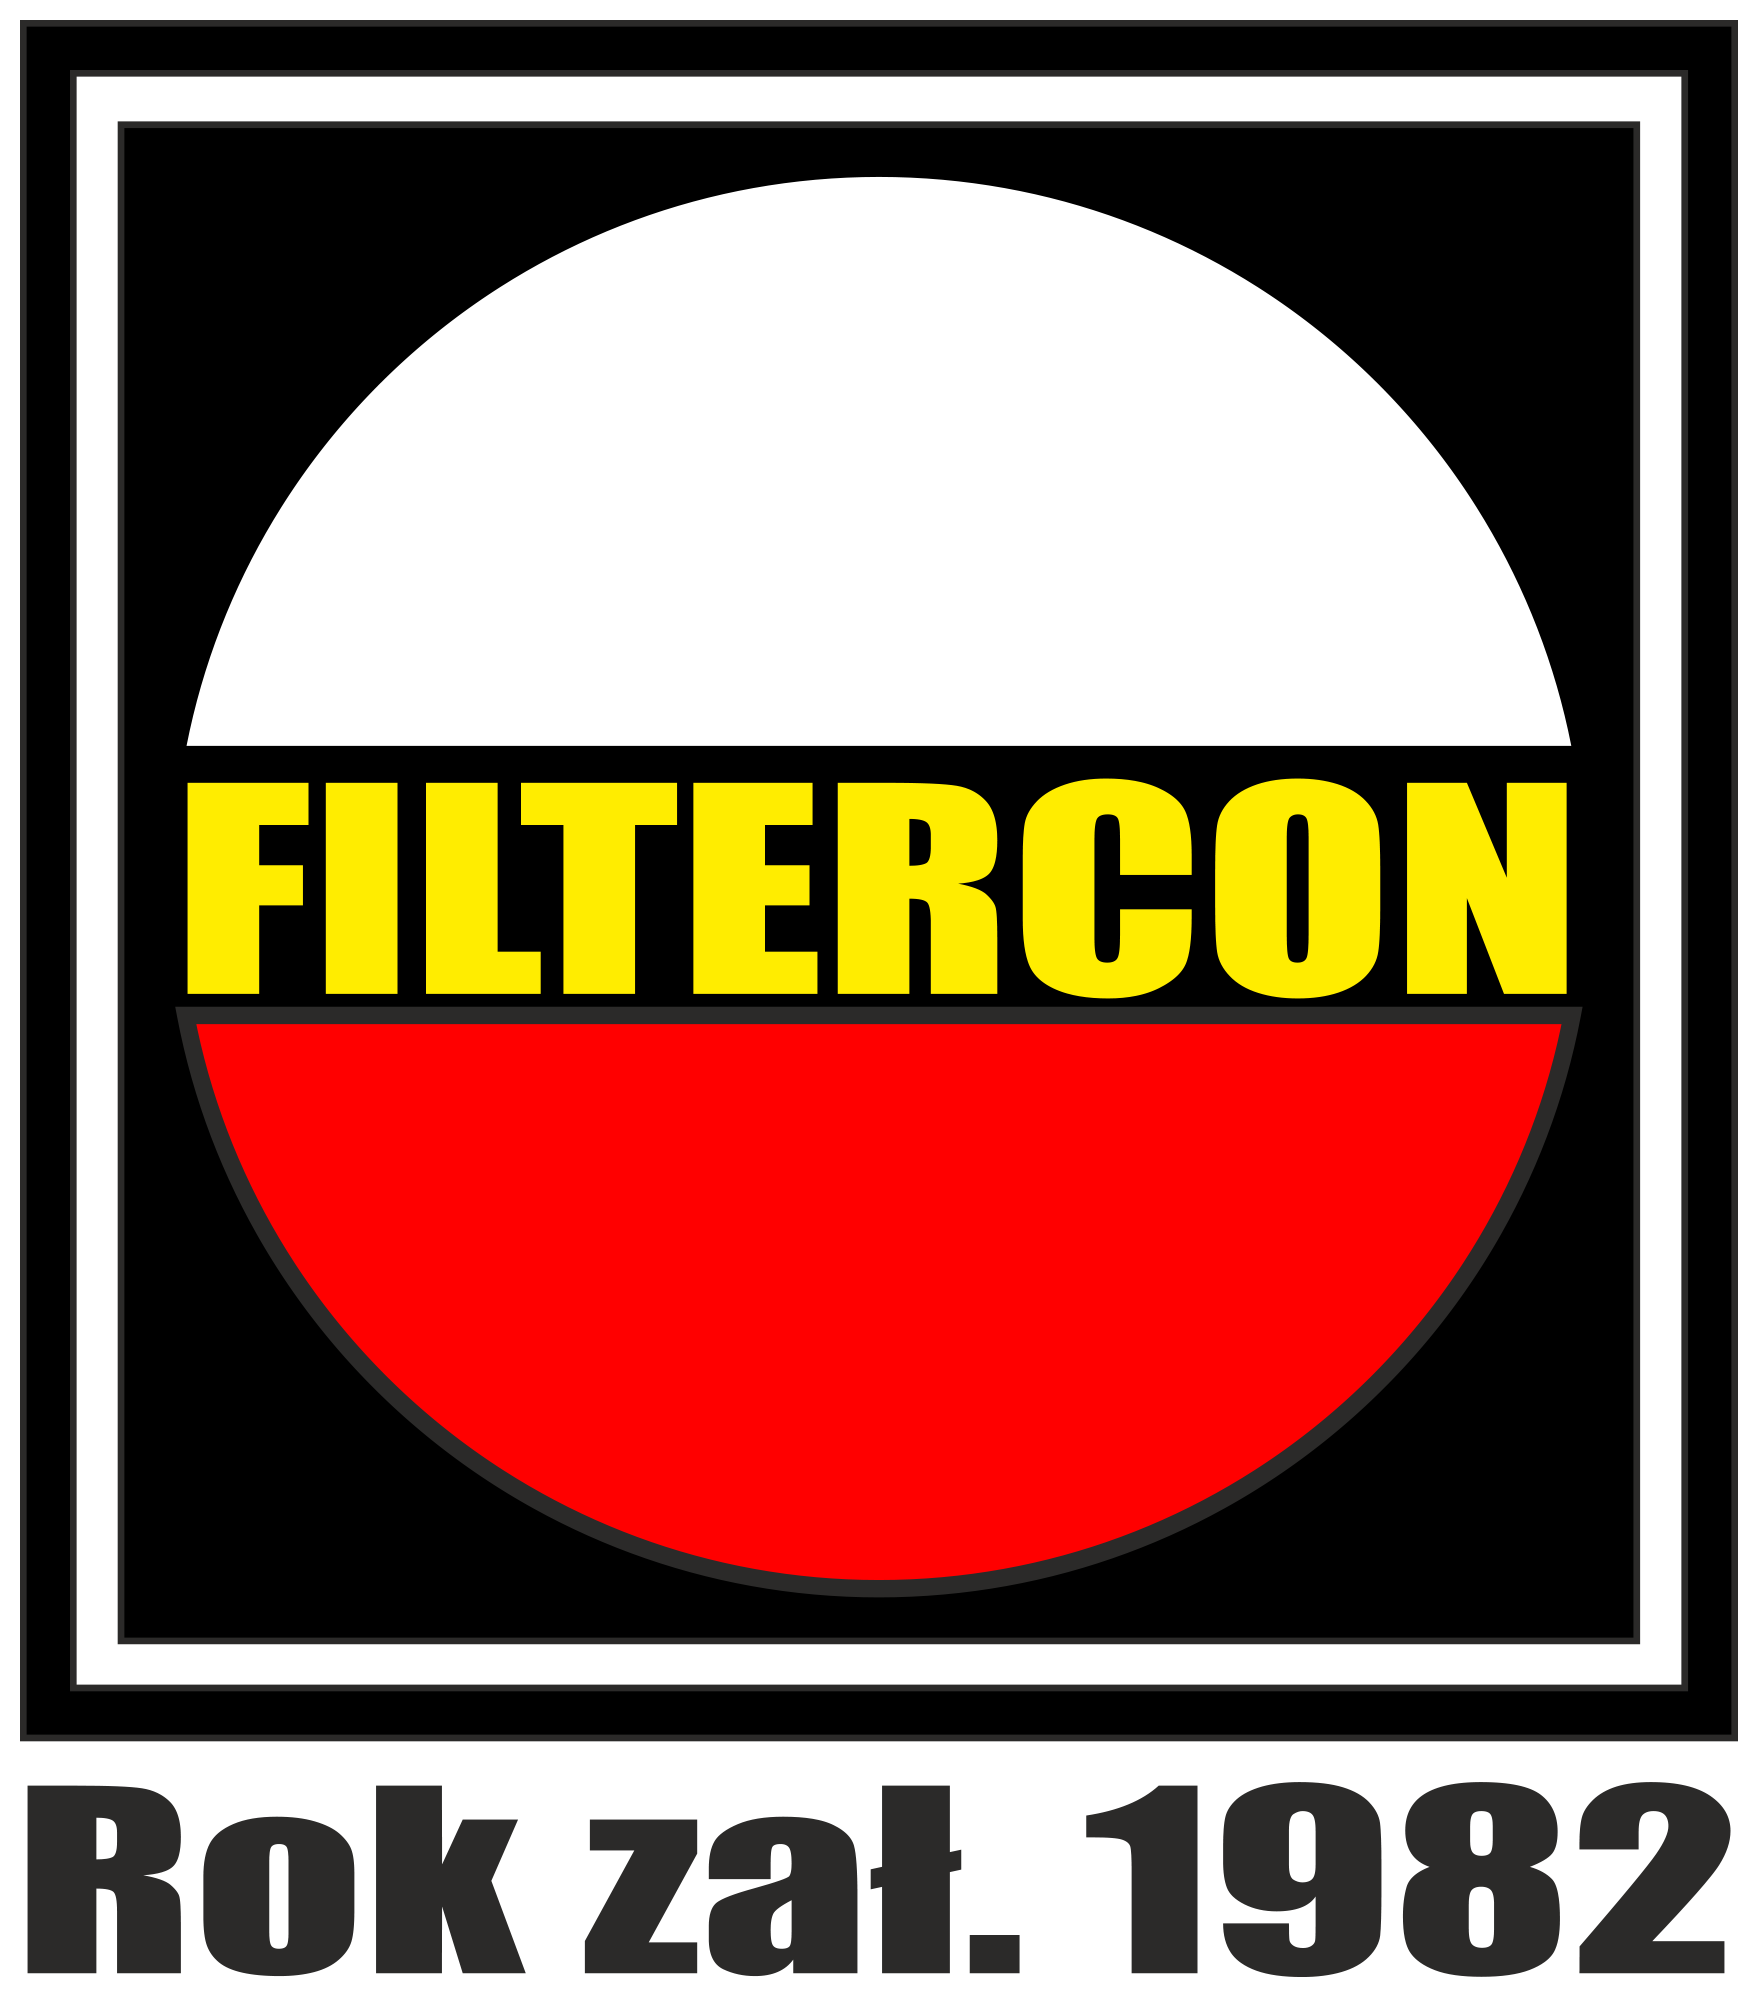 FILTERCON